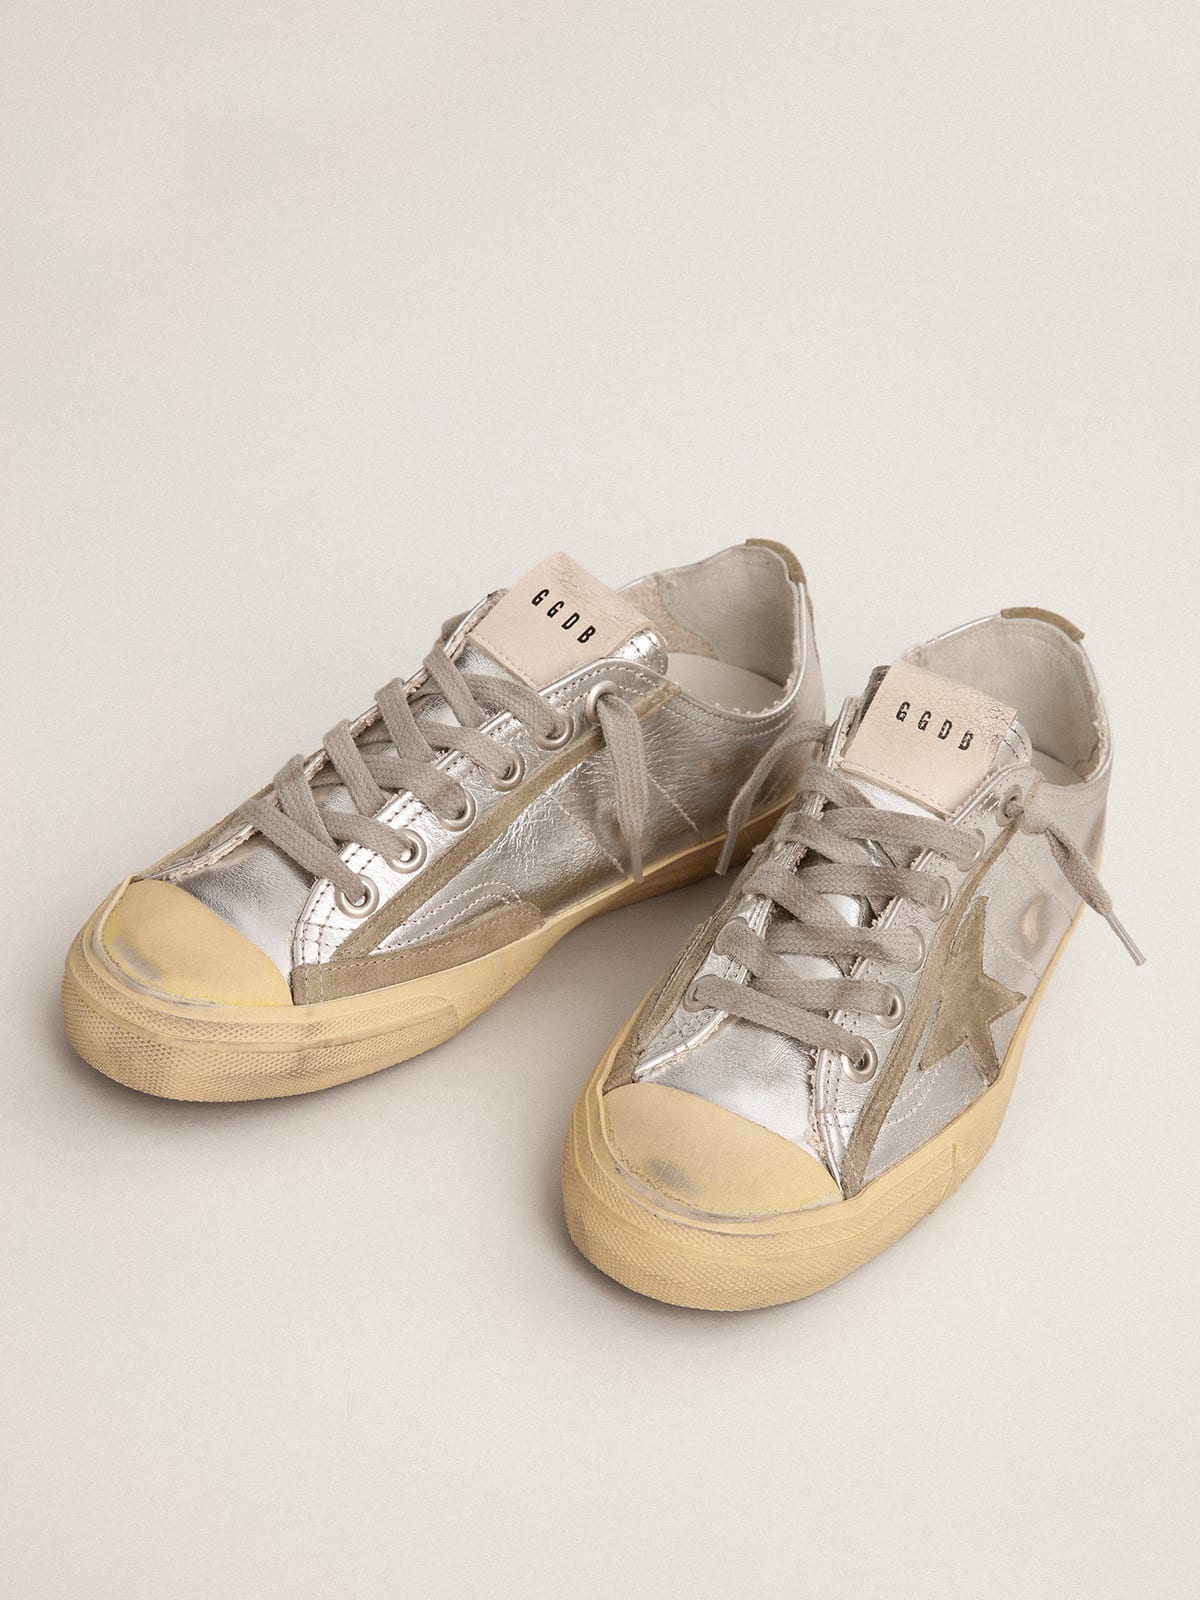 Golden Goose - Sneaker V-Star LTD in pelle laminata color argento con stella in suede color grigio ghiaccio in 